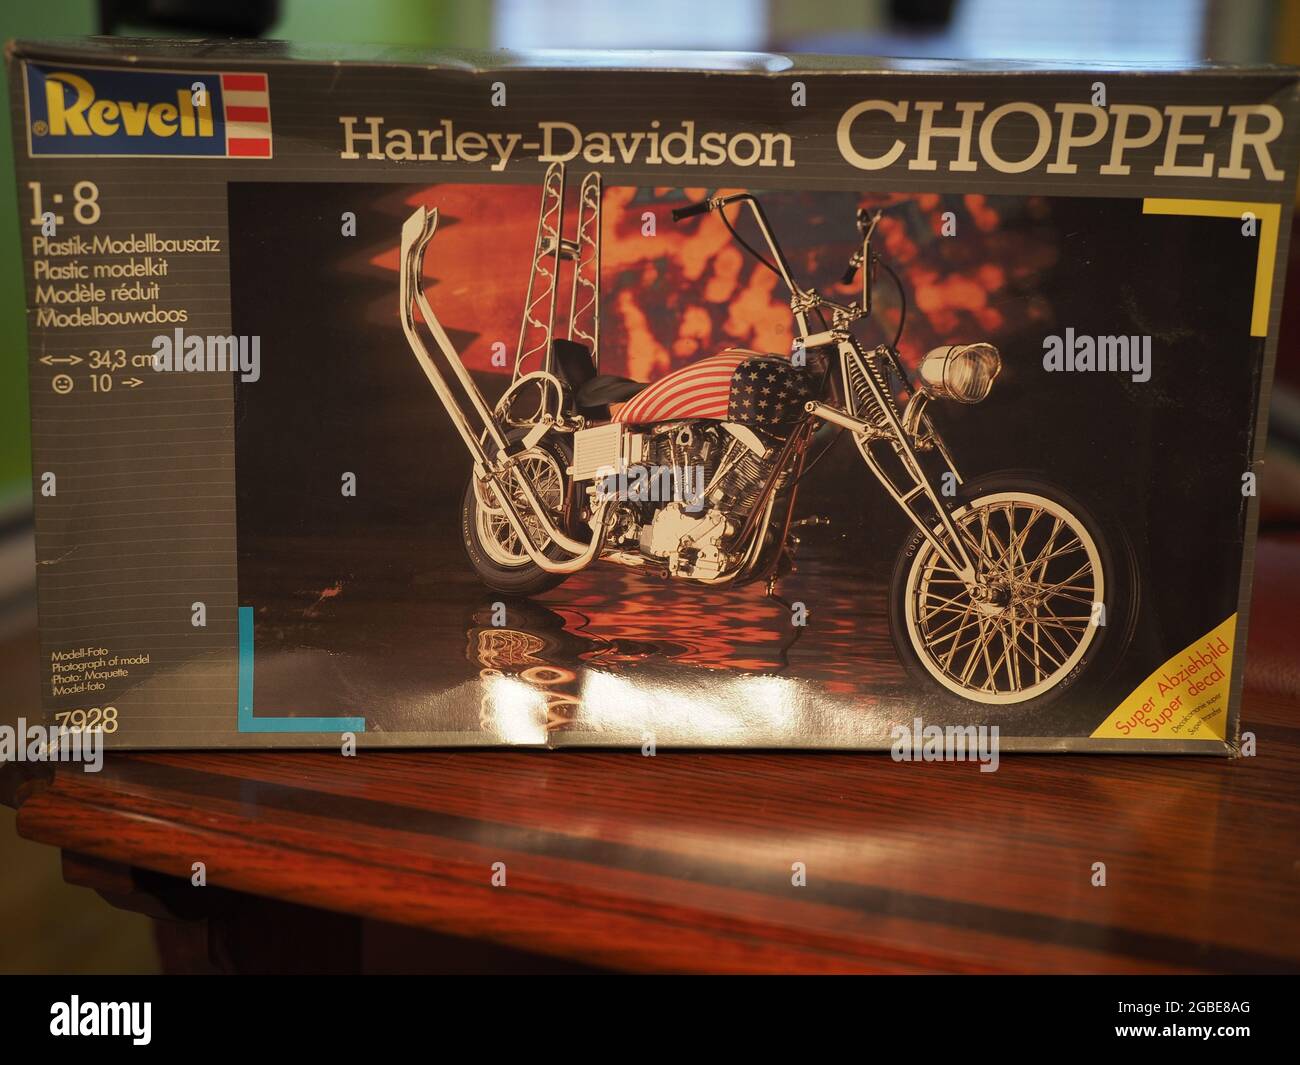 Harley-Davidson box by Revell, scale model 1/8 Stock Photo - Alamy